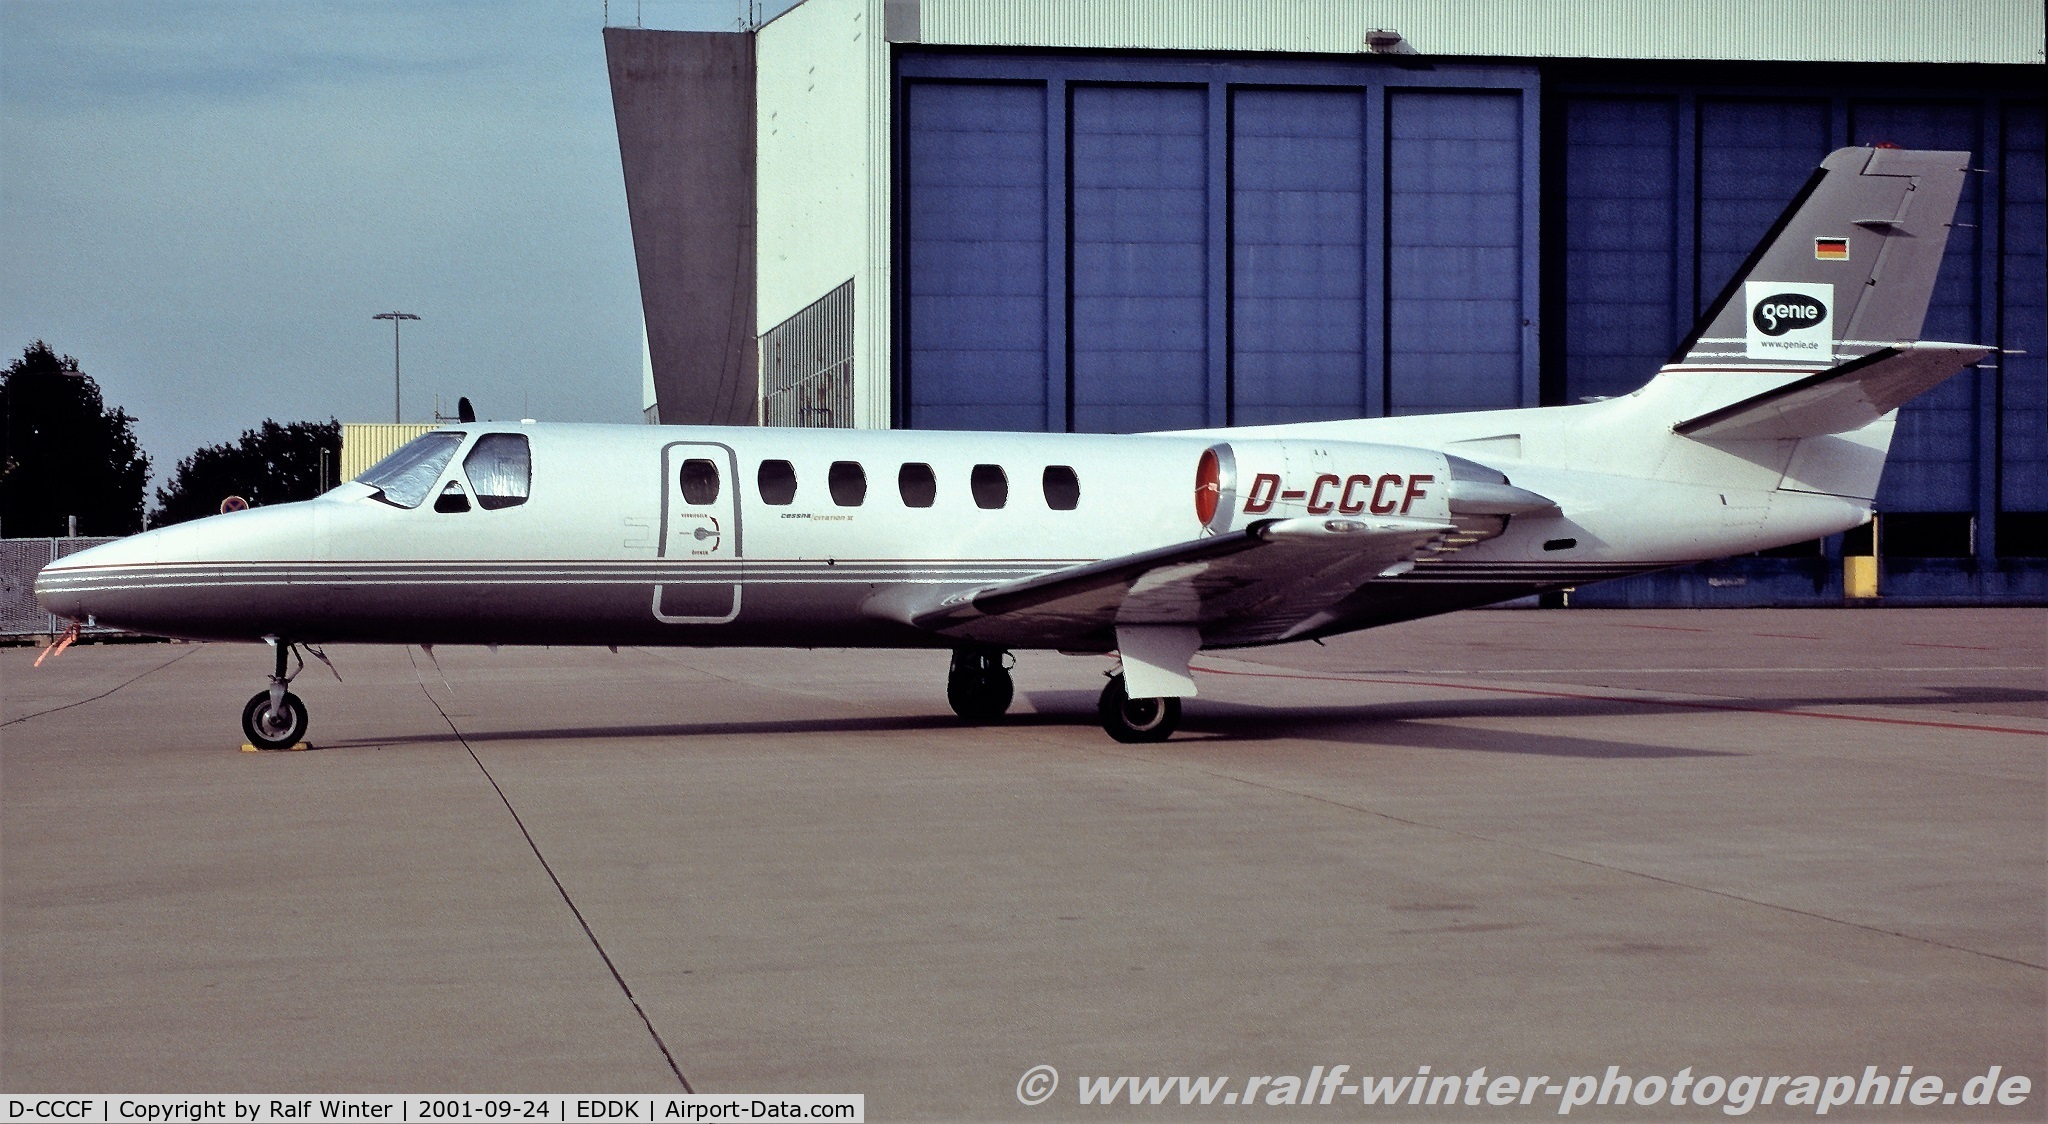 D-CCCF, 1980 Cessna 550 Citation II C/N 550-0189, Cessna 550 Citation II - CCF Manager Airline - 550-0189 - D-CCCF - 24.09.2001 - CGN